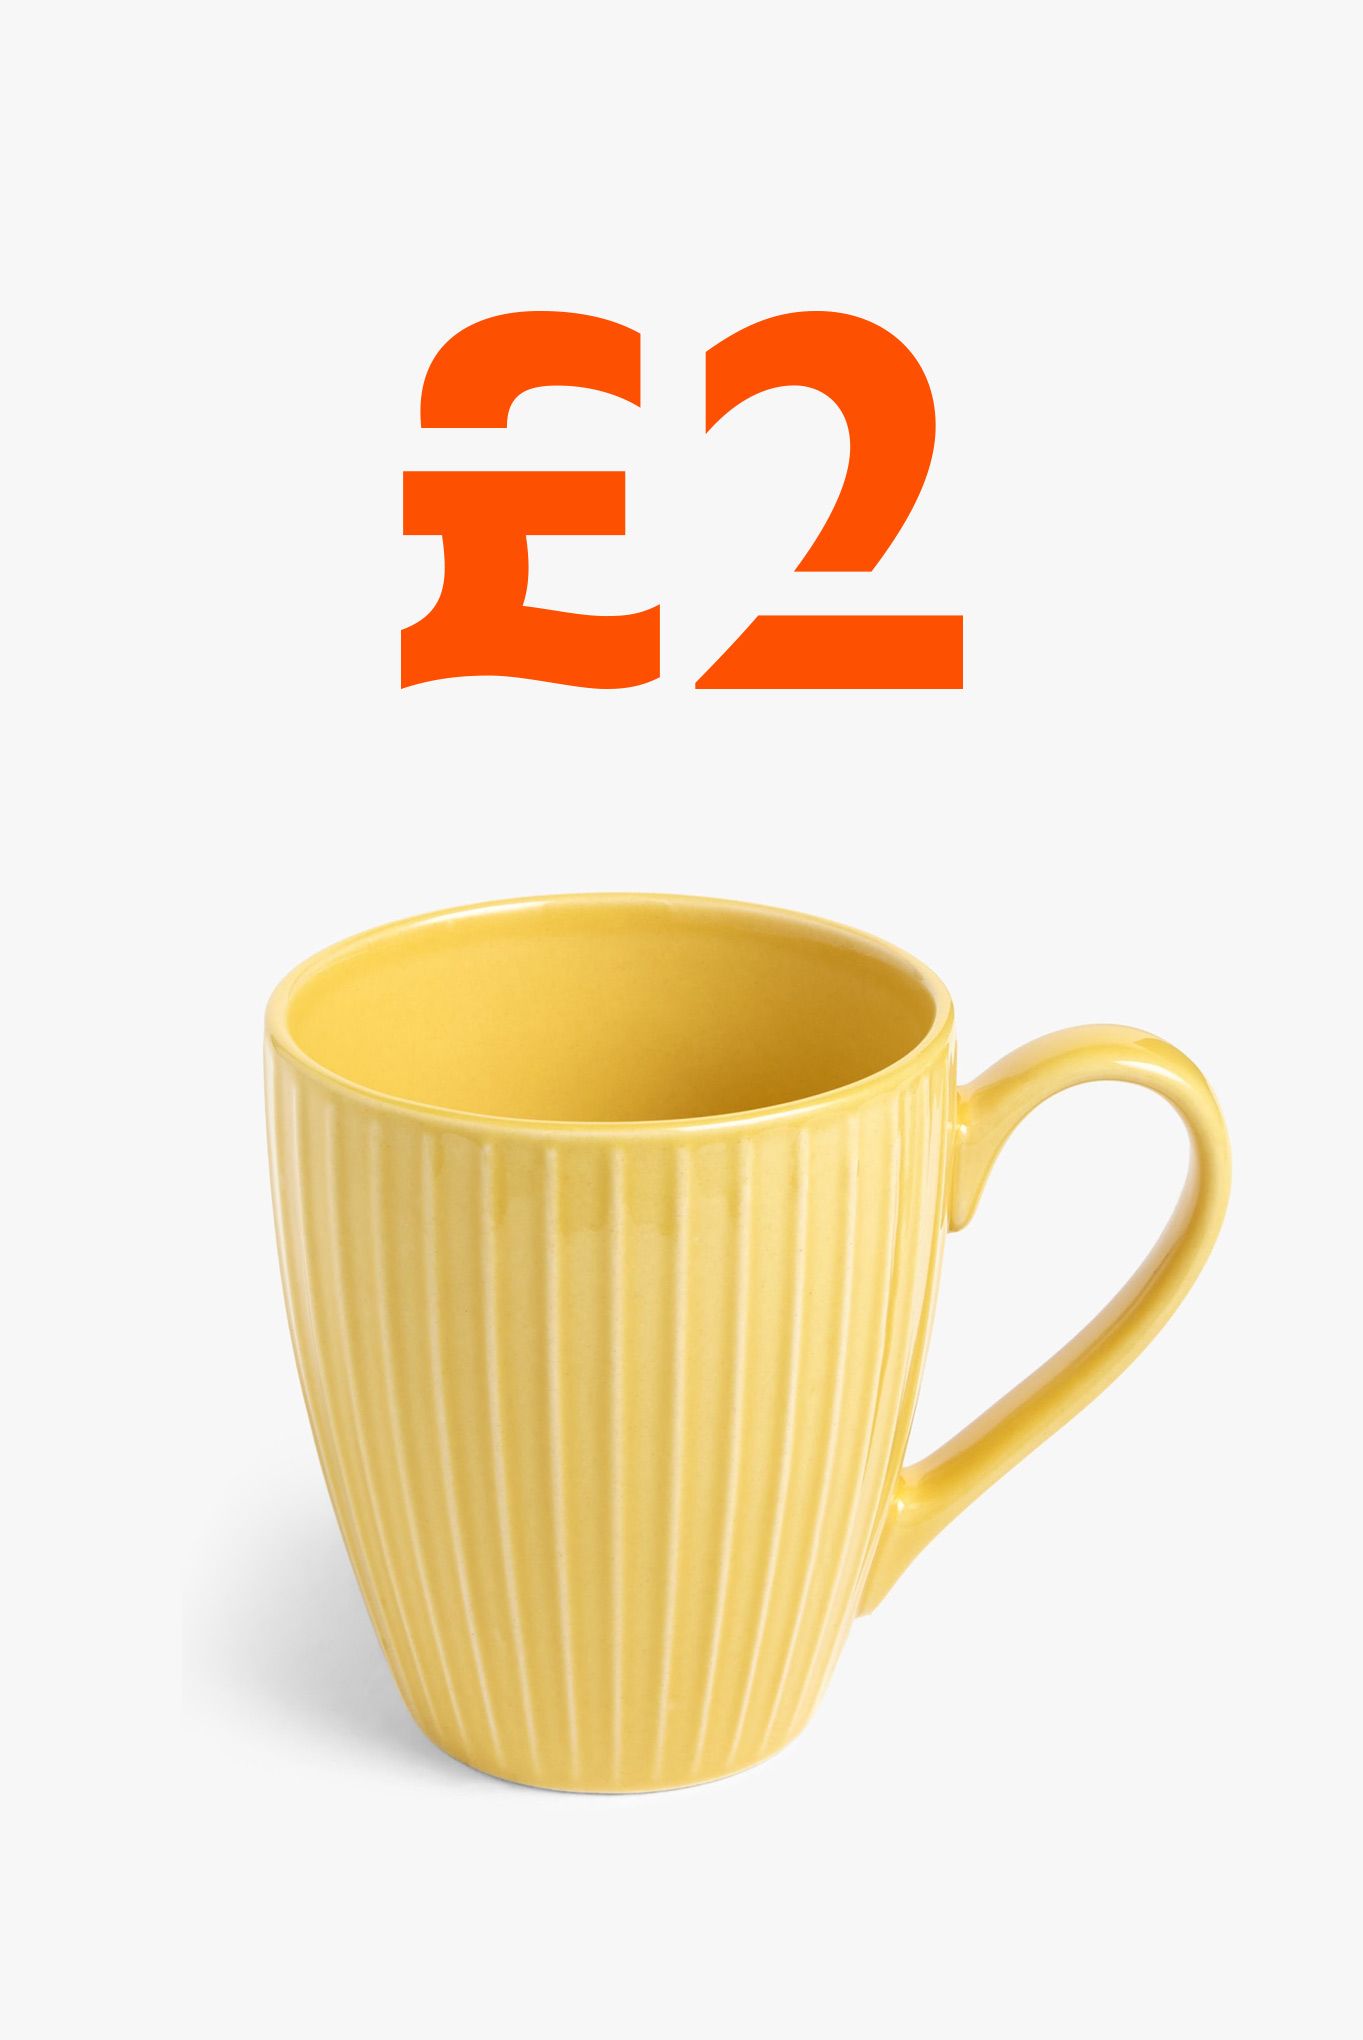 ANYDAY John Lewis & Partners Ribbed Mug, 370ml, Mustard £2.00